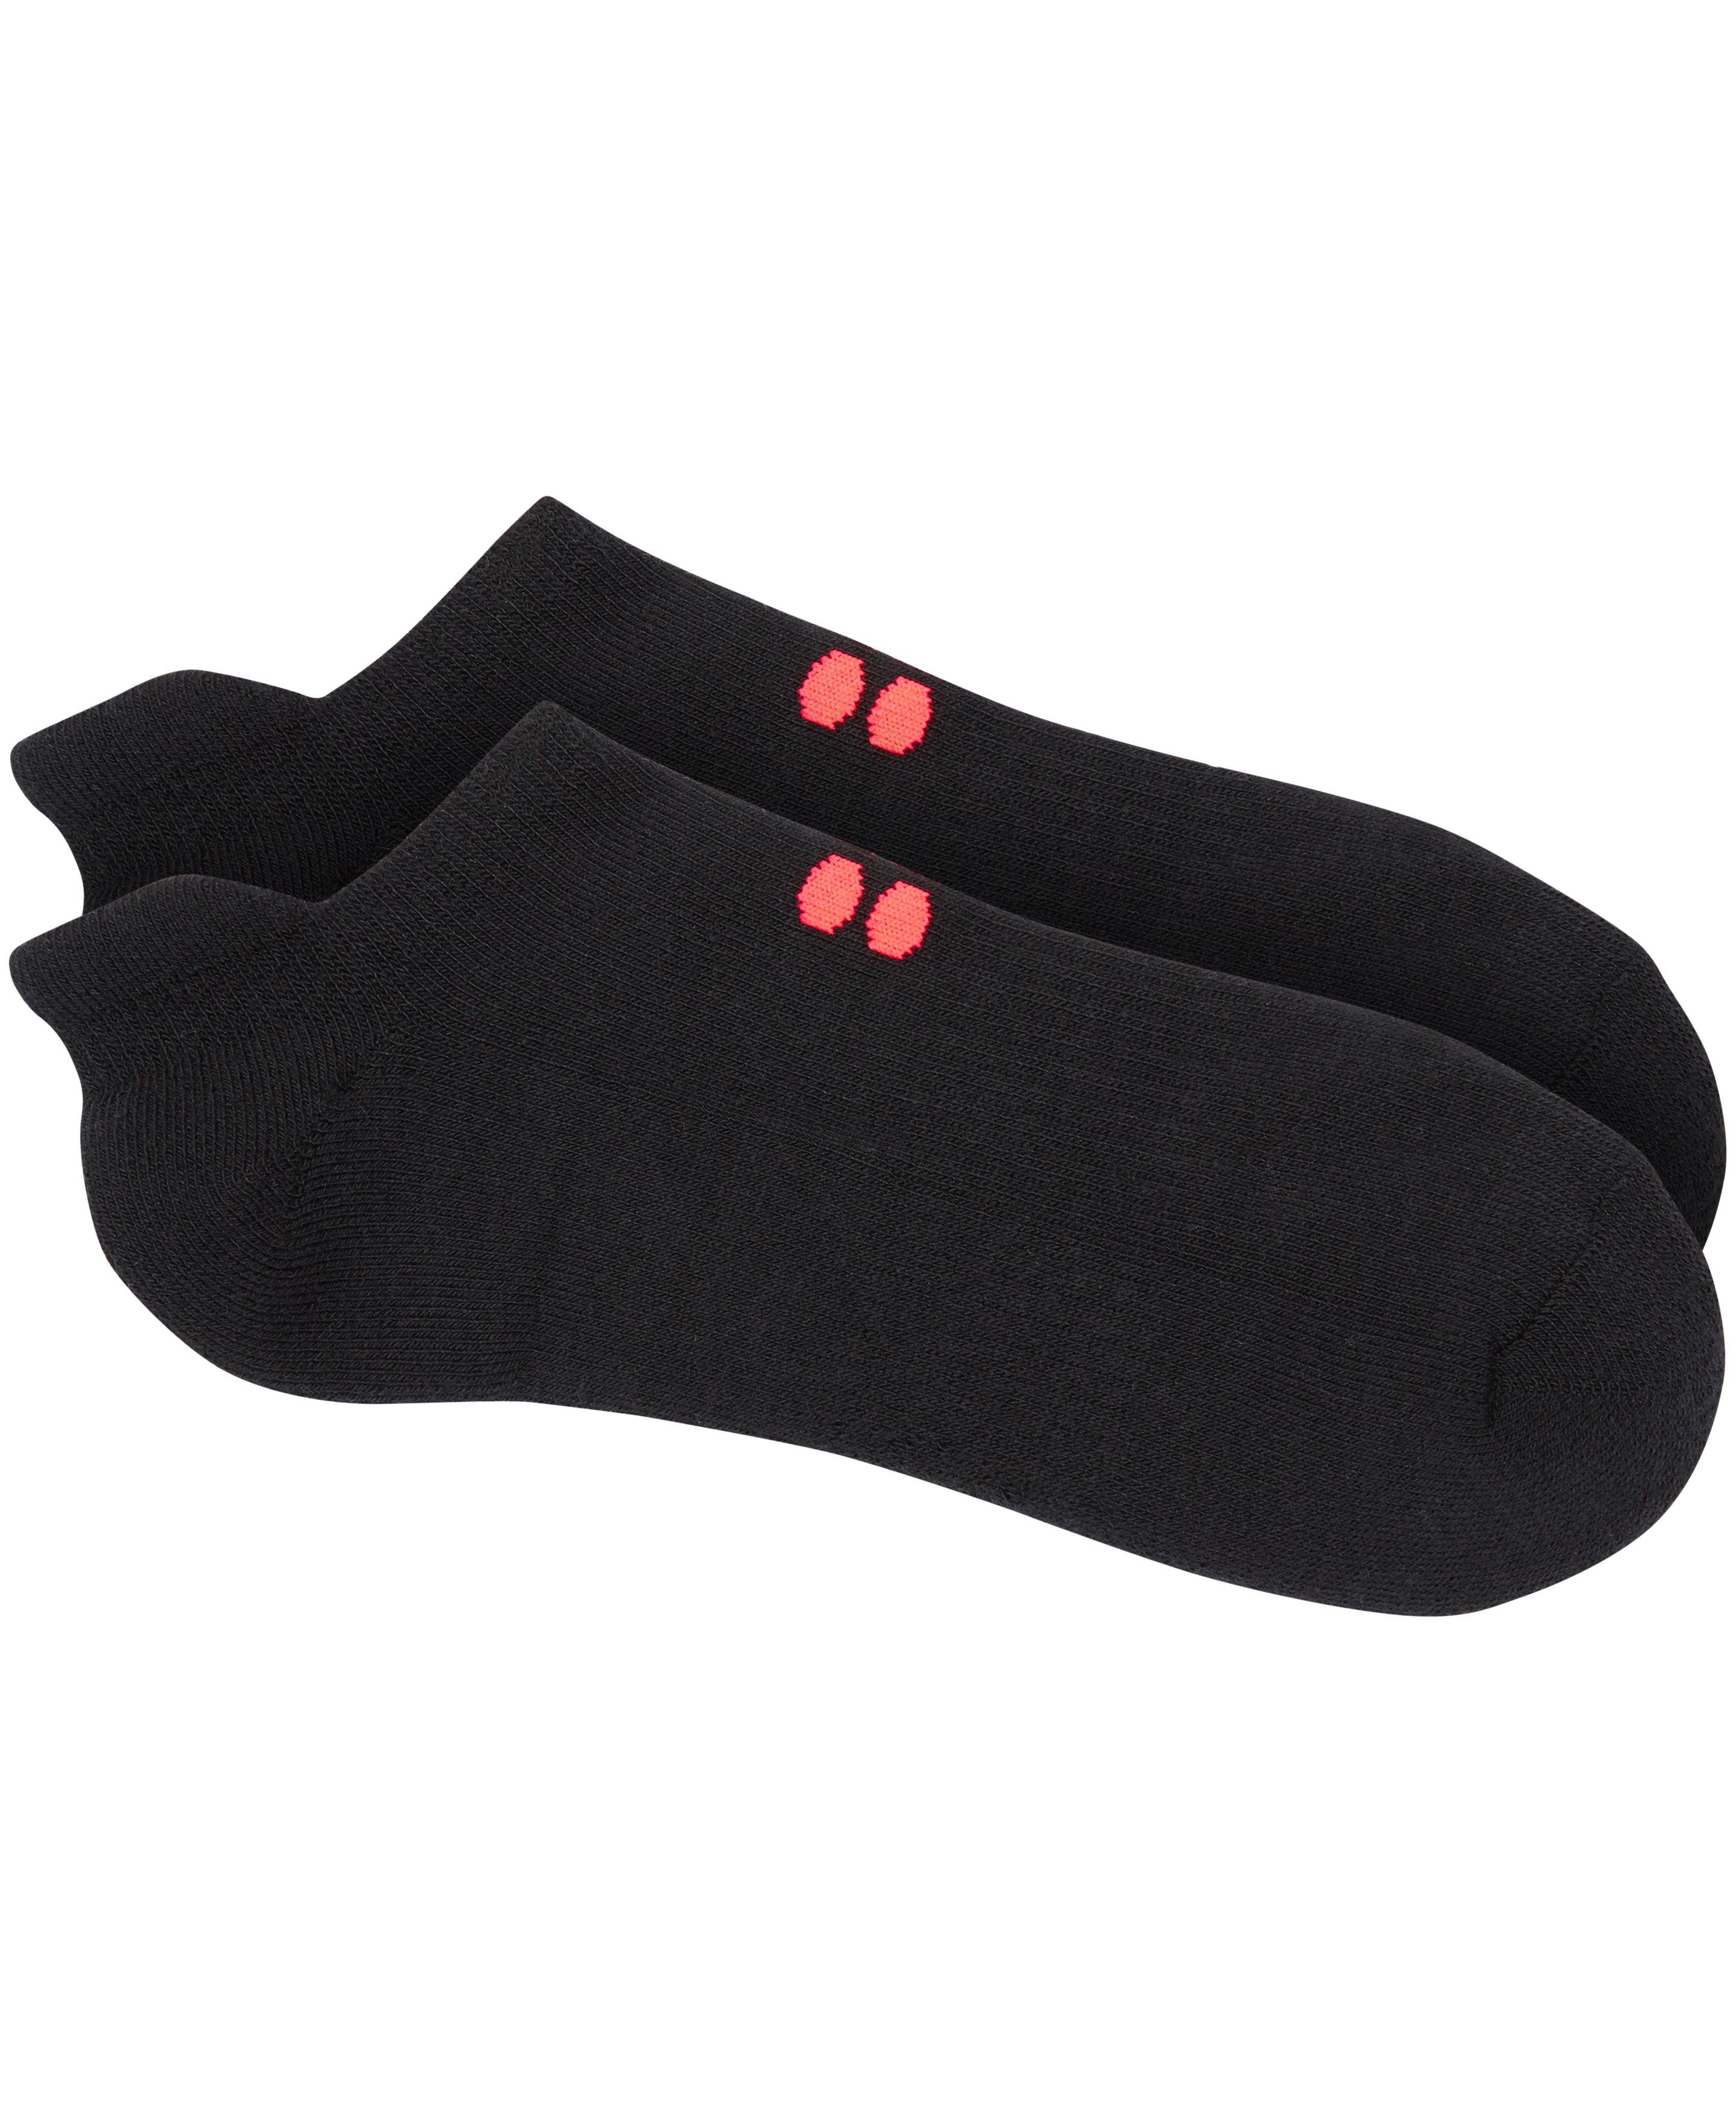 Workout Trainer Socks - black | Women's 